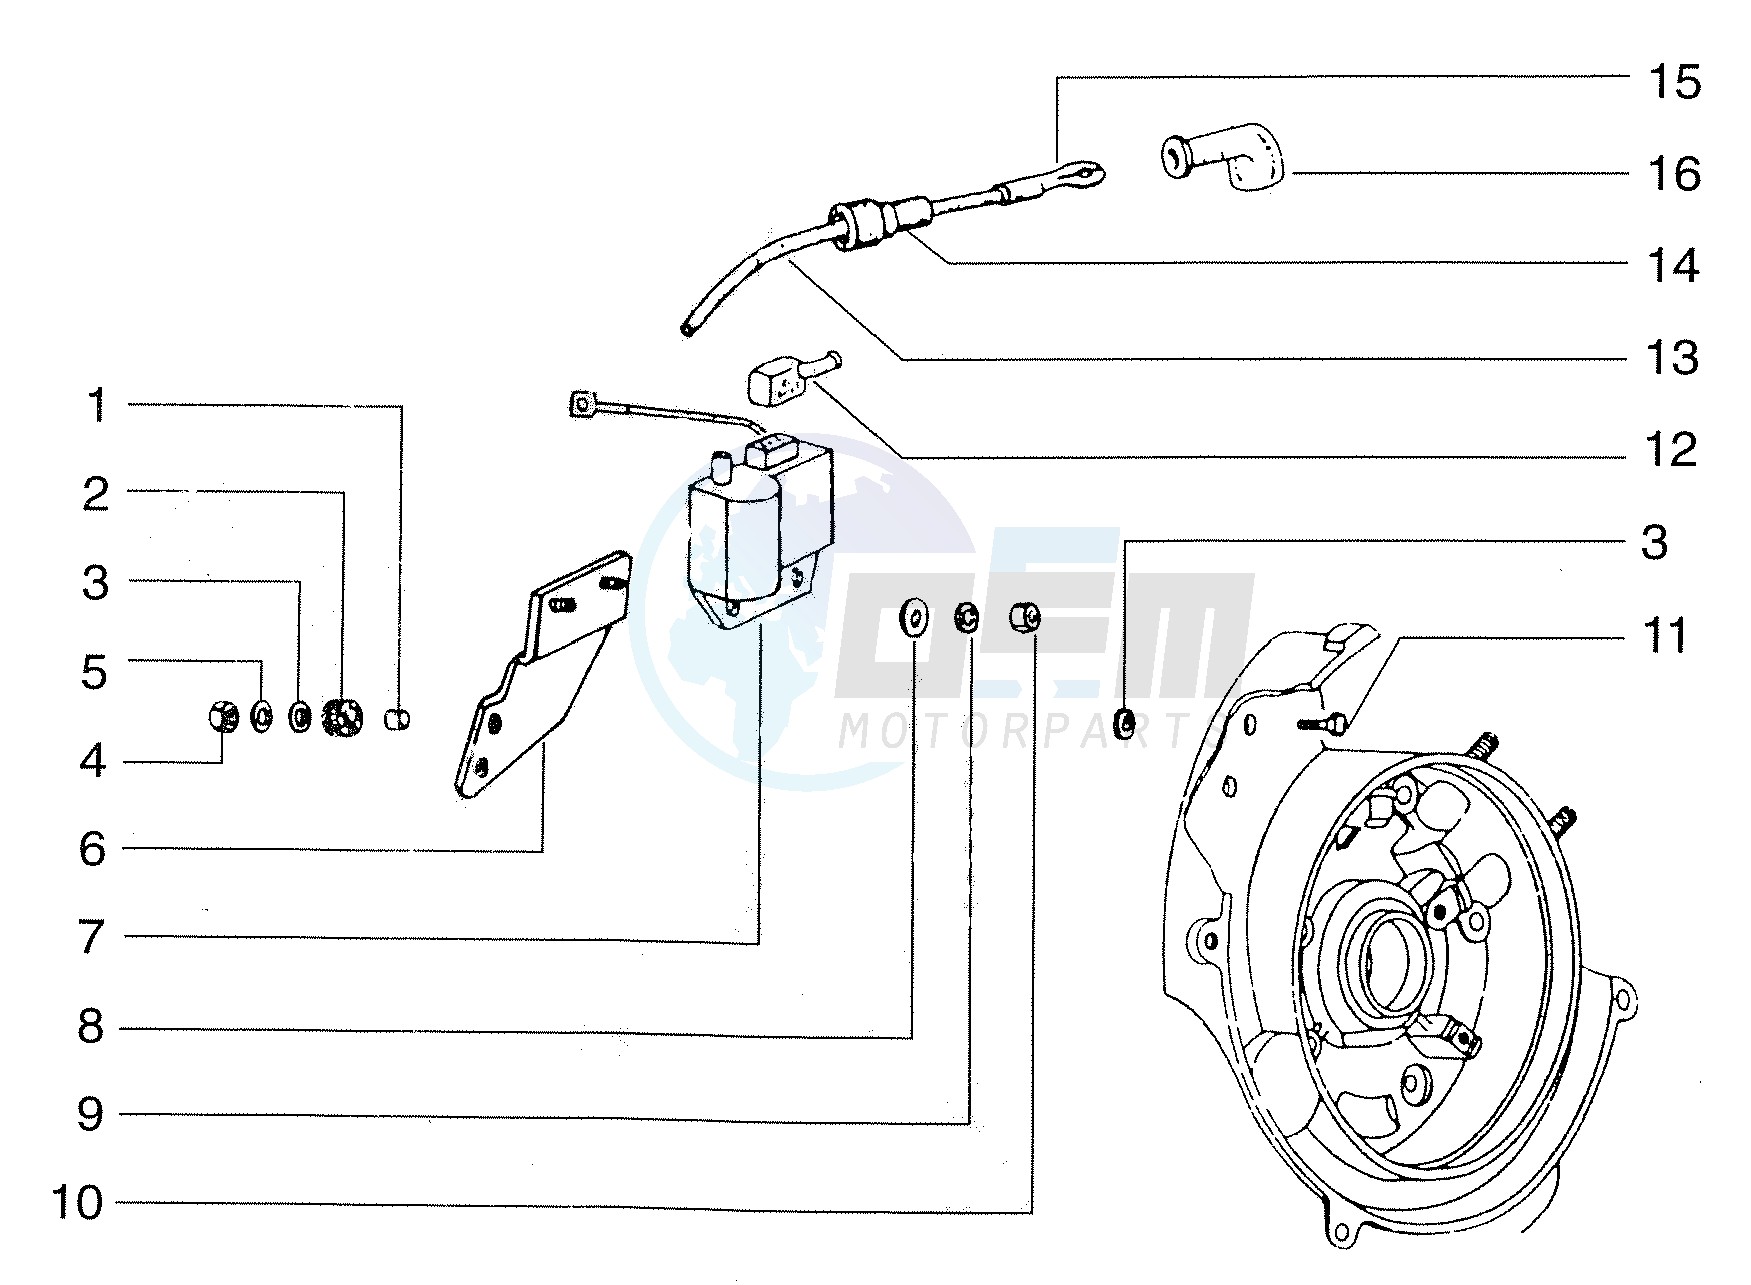 Electronic ignition device blueprint